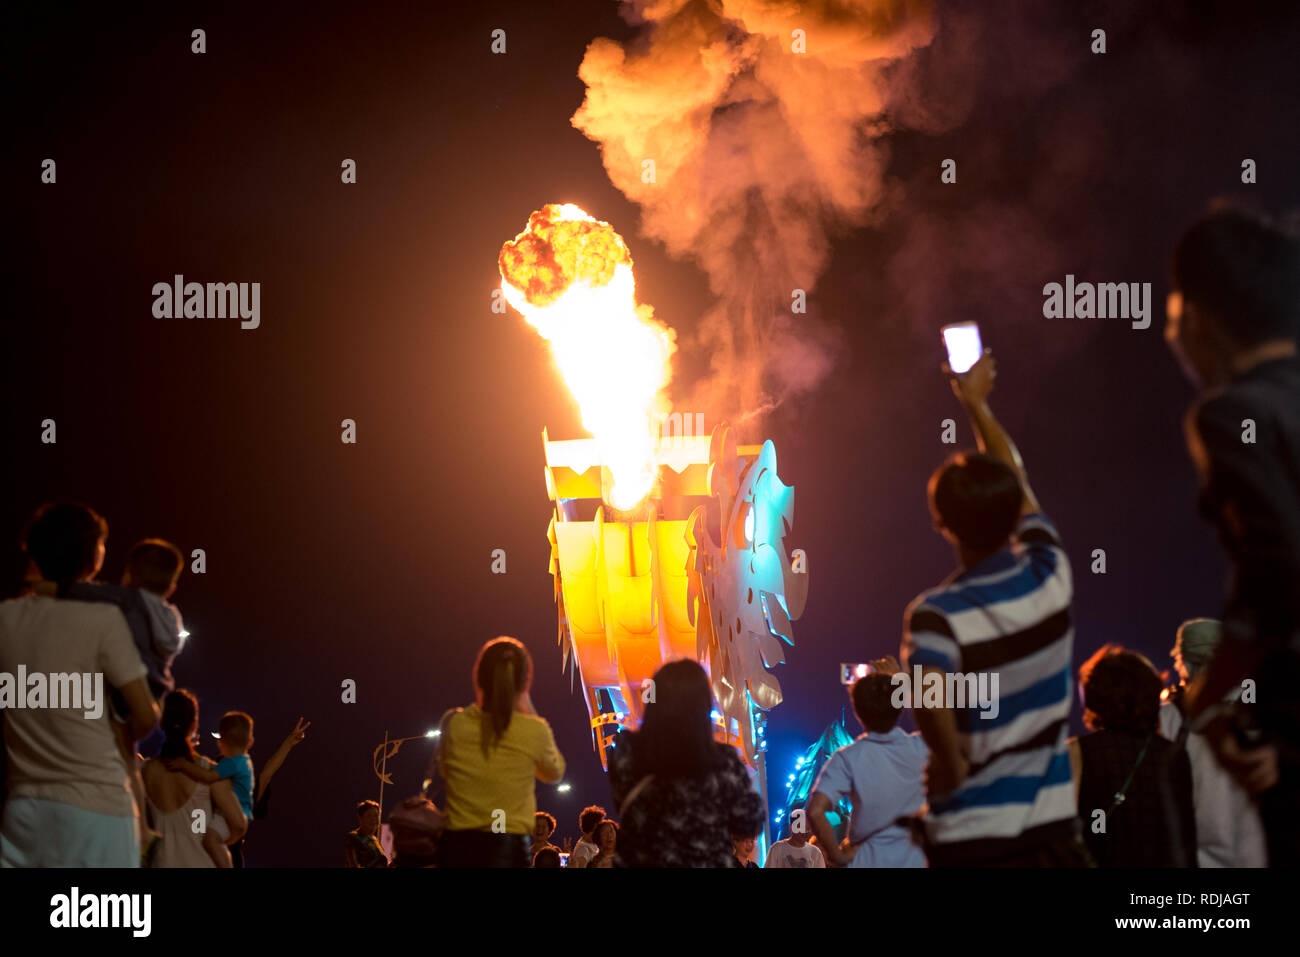 Danang, Vietnam - October 14, 2018: Danang bridge dragon spews fire in the dark of night surrounded by the crowd of spectators. Stock Photo